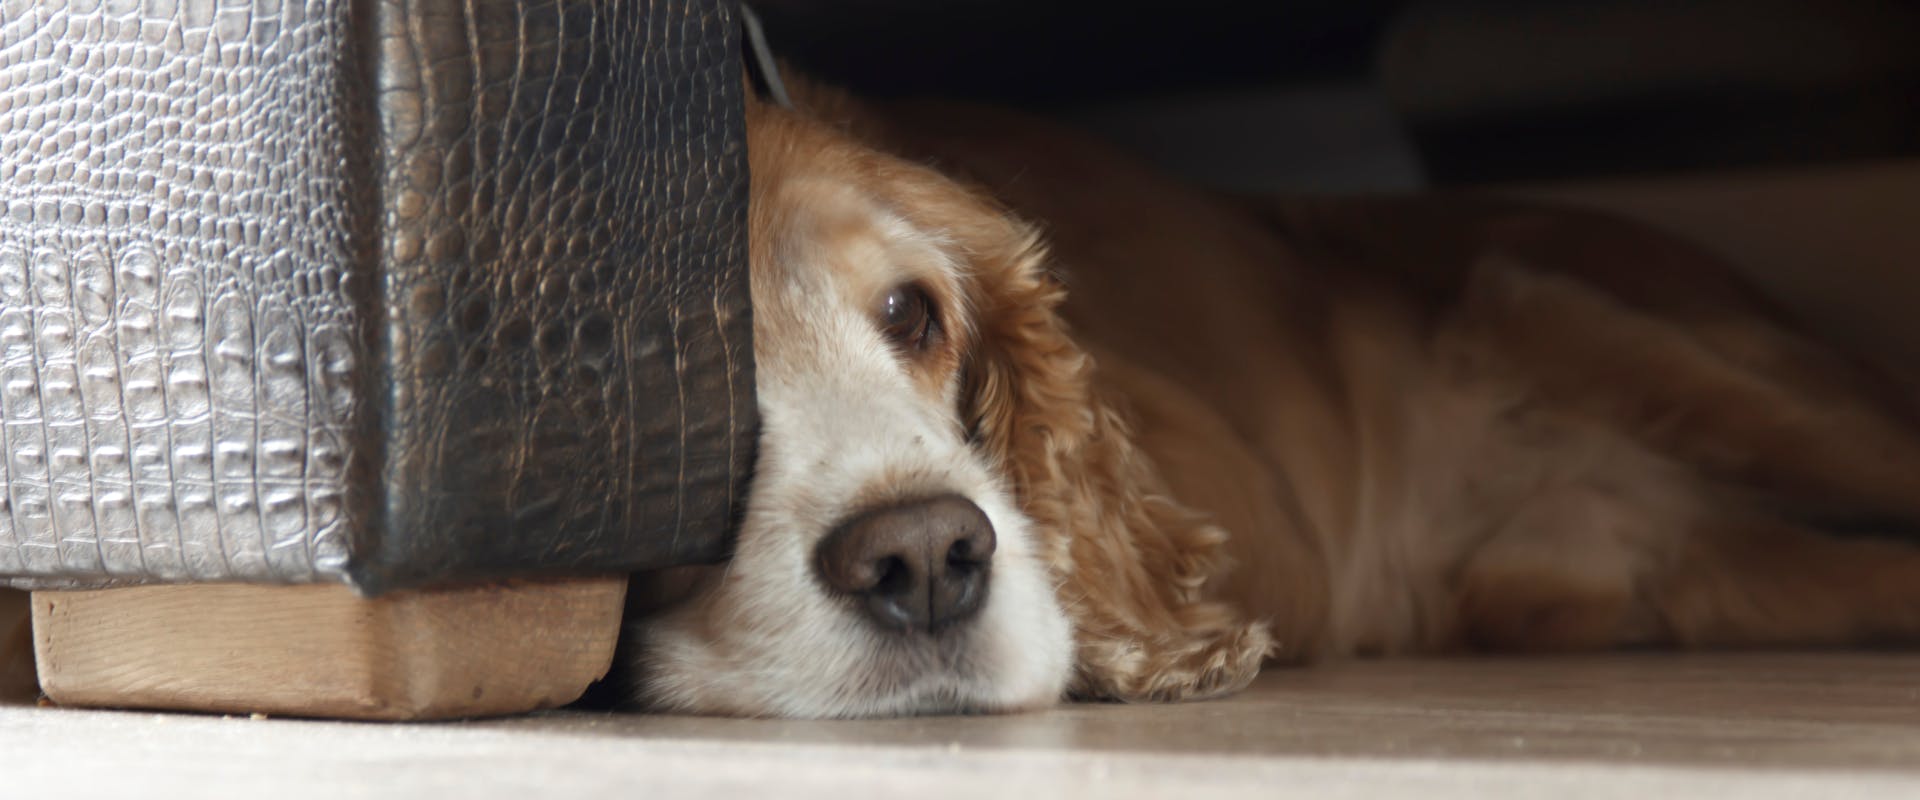 A rescue dog sleeps under a chair.